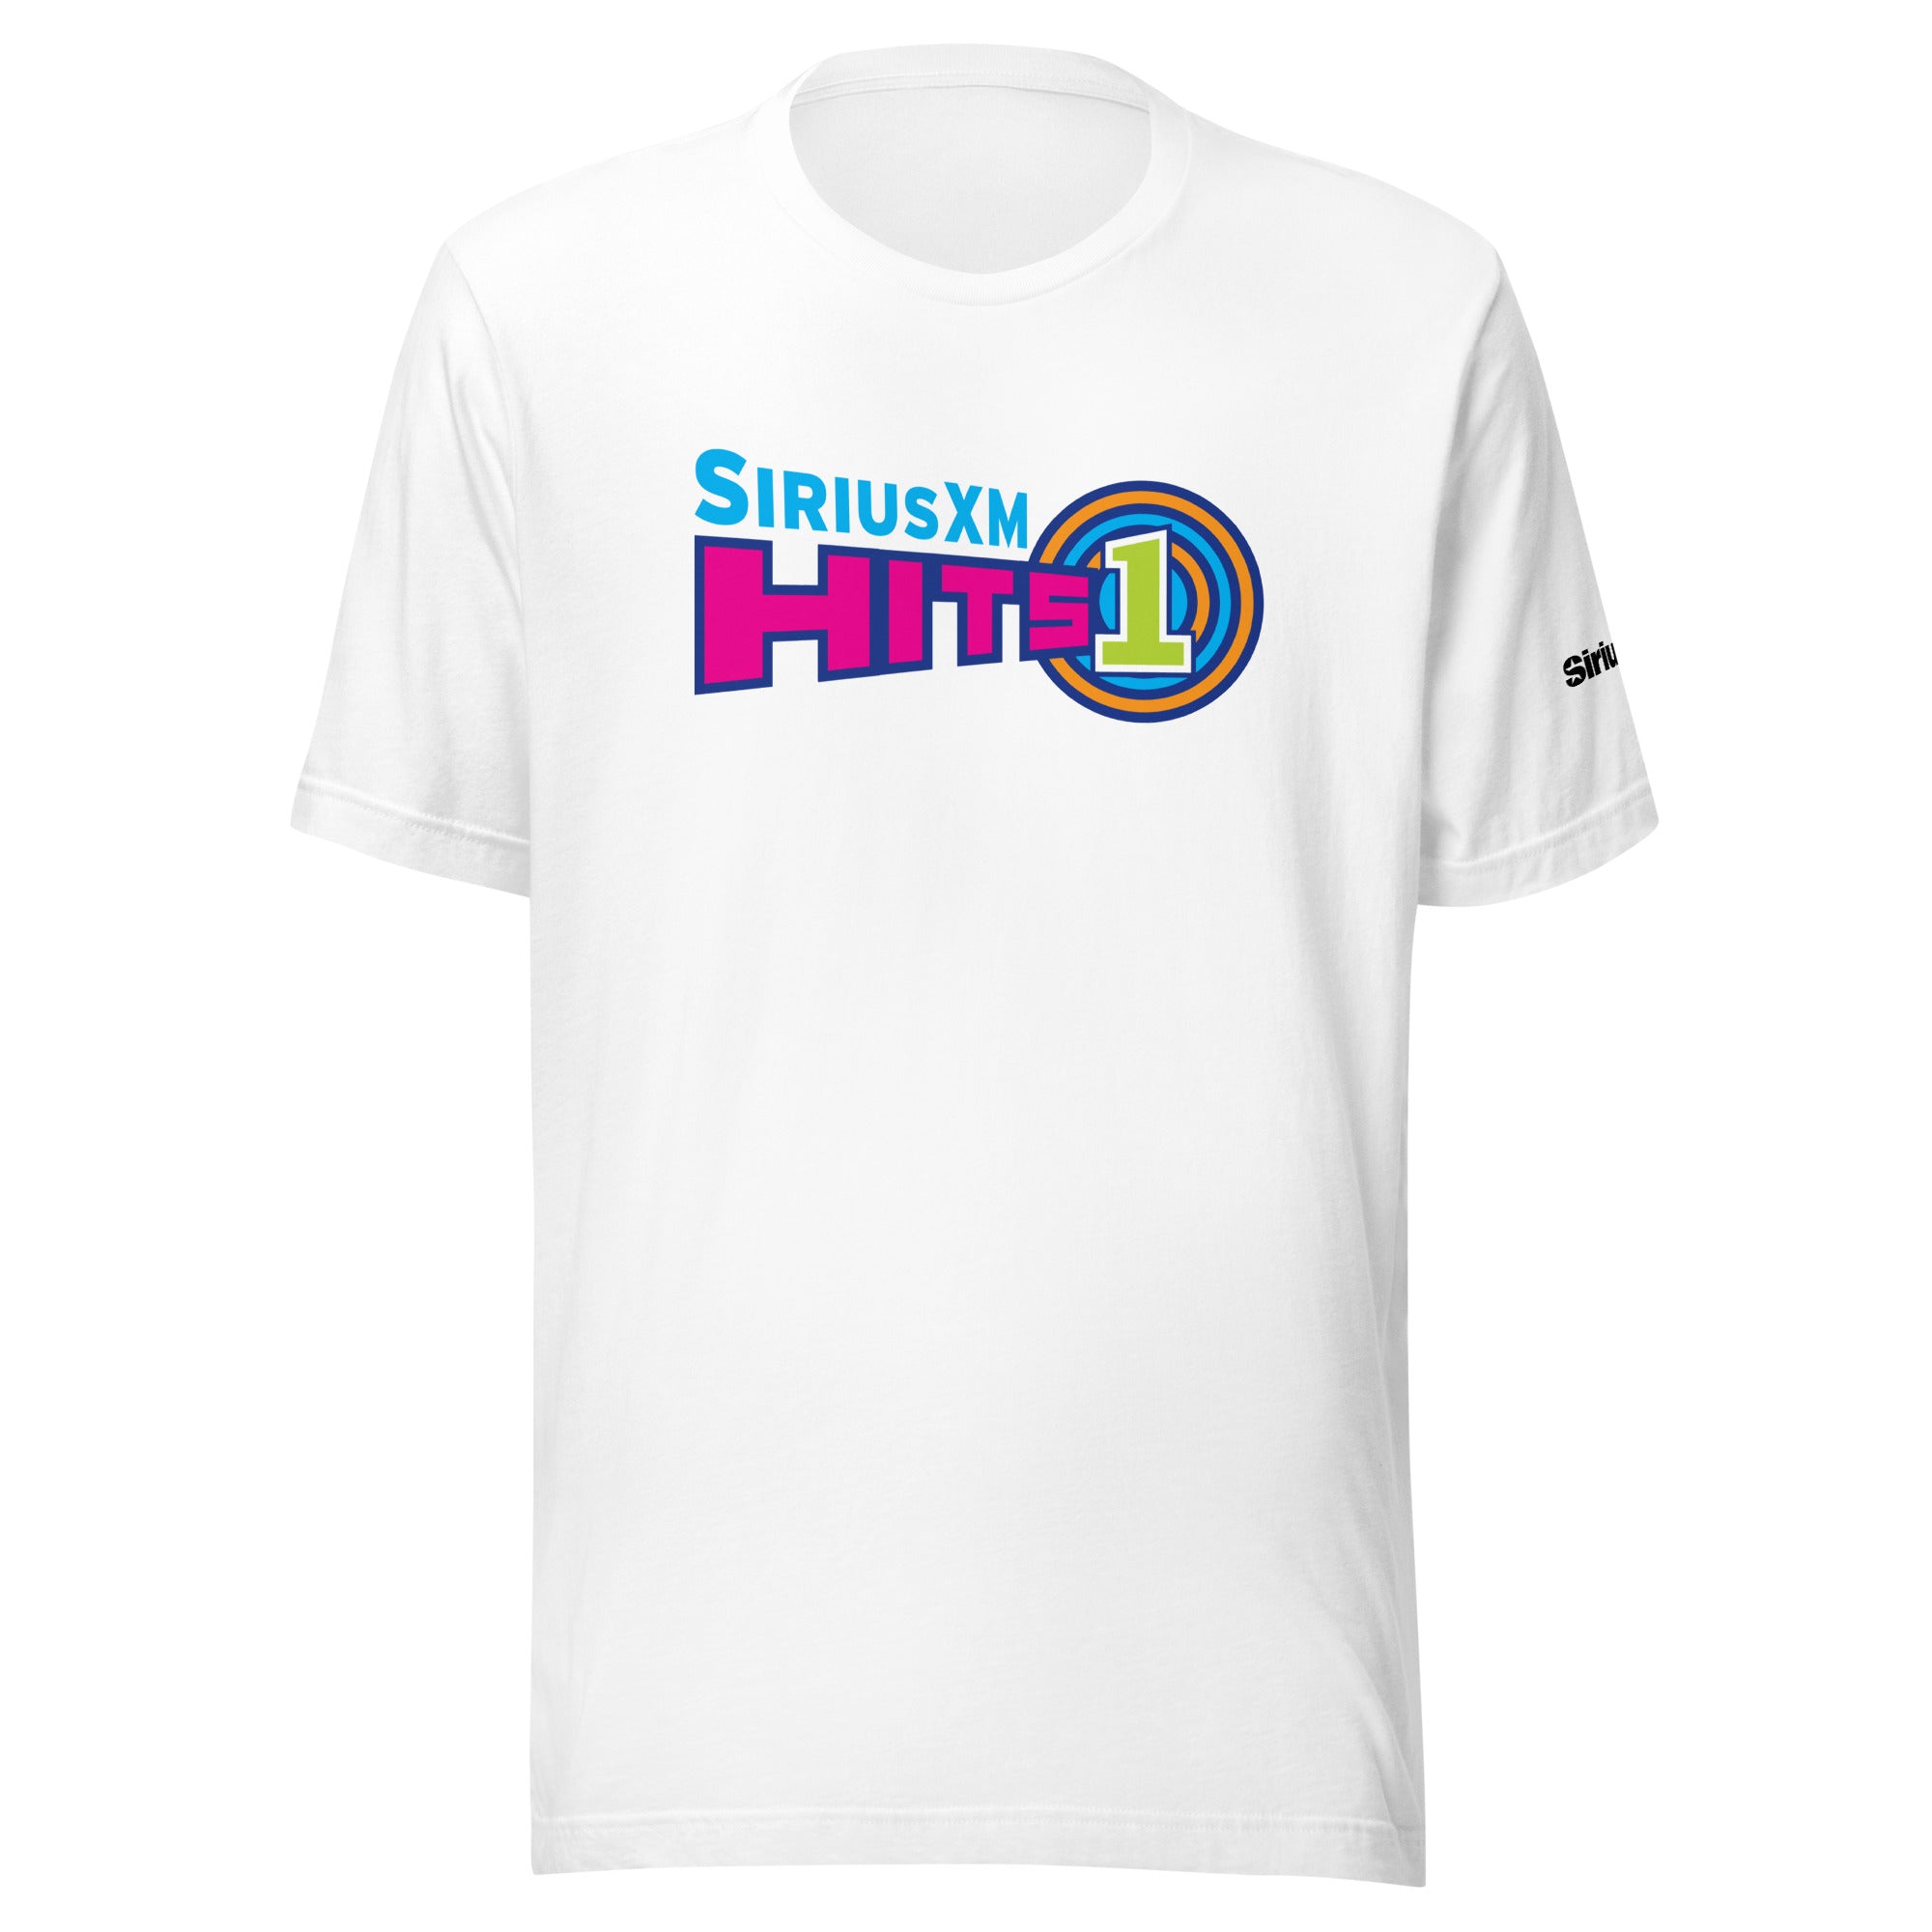 Hits 1: T-shirt (White)